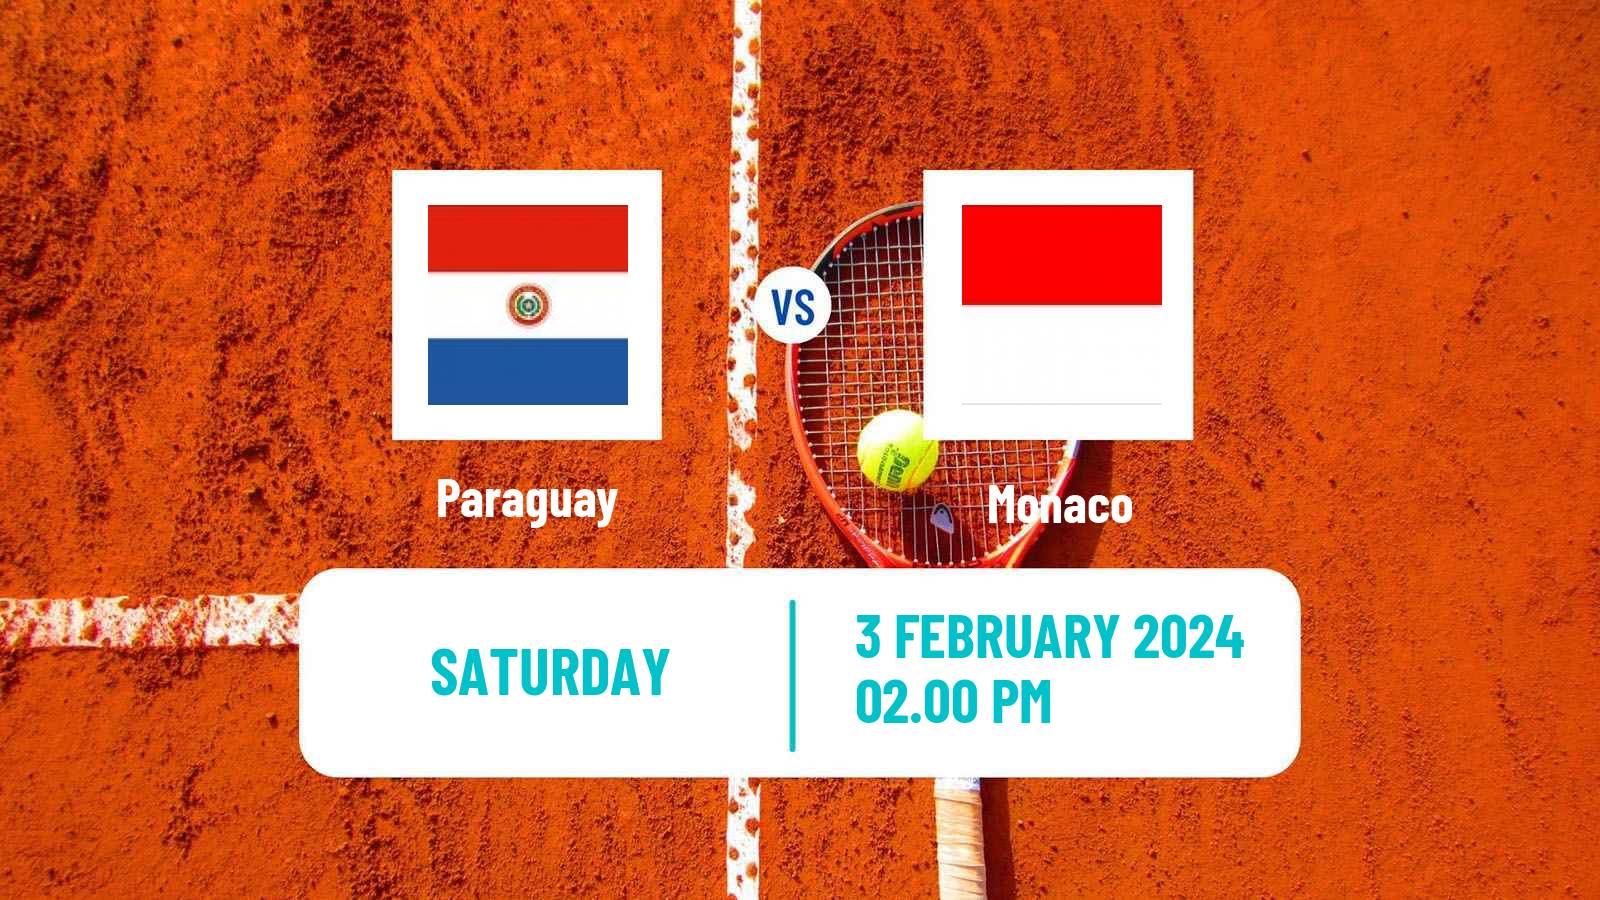 Tennis Davis Cup World Group II Teams Paraguay - Monaco